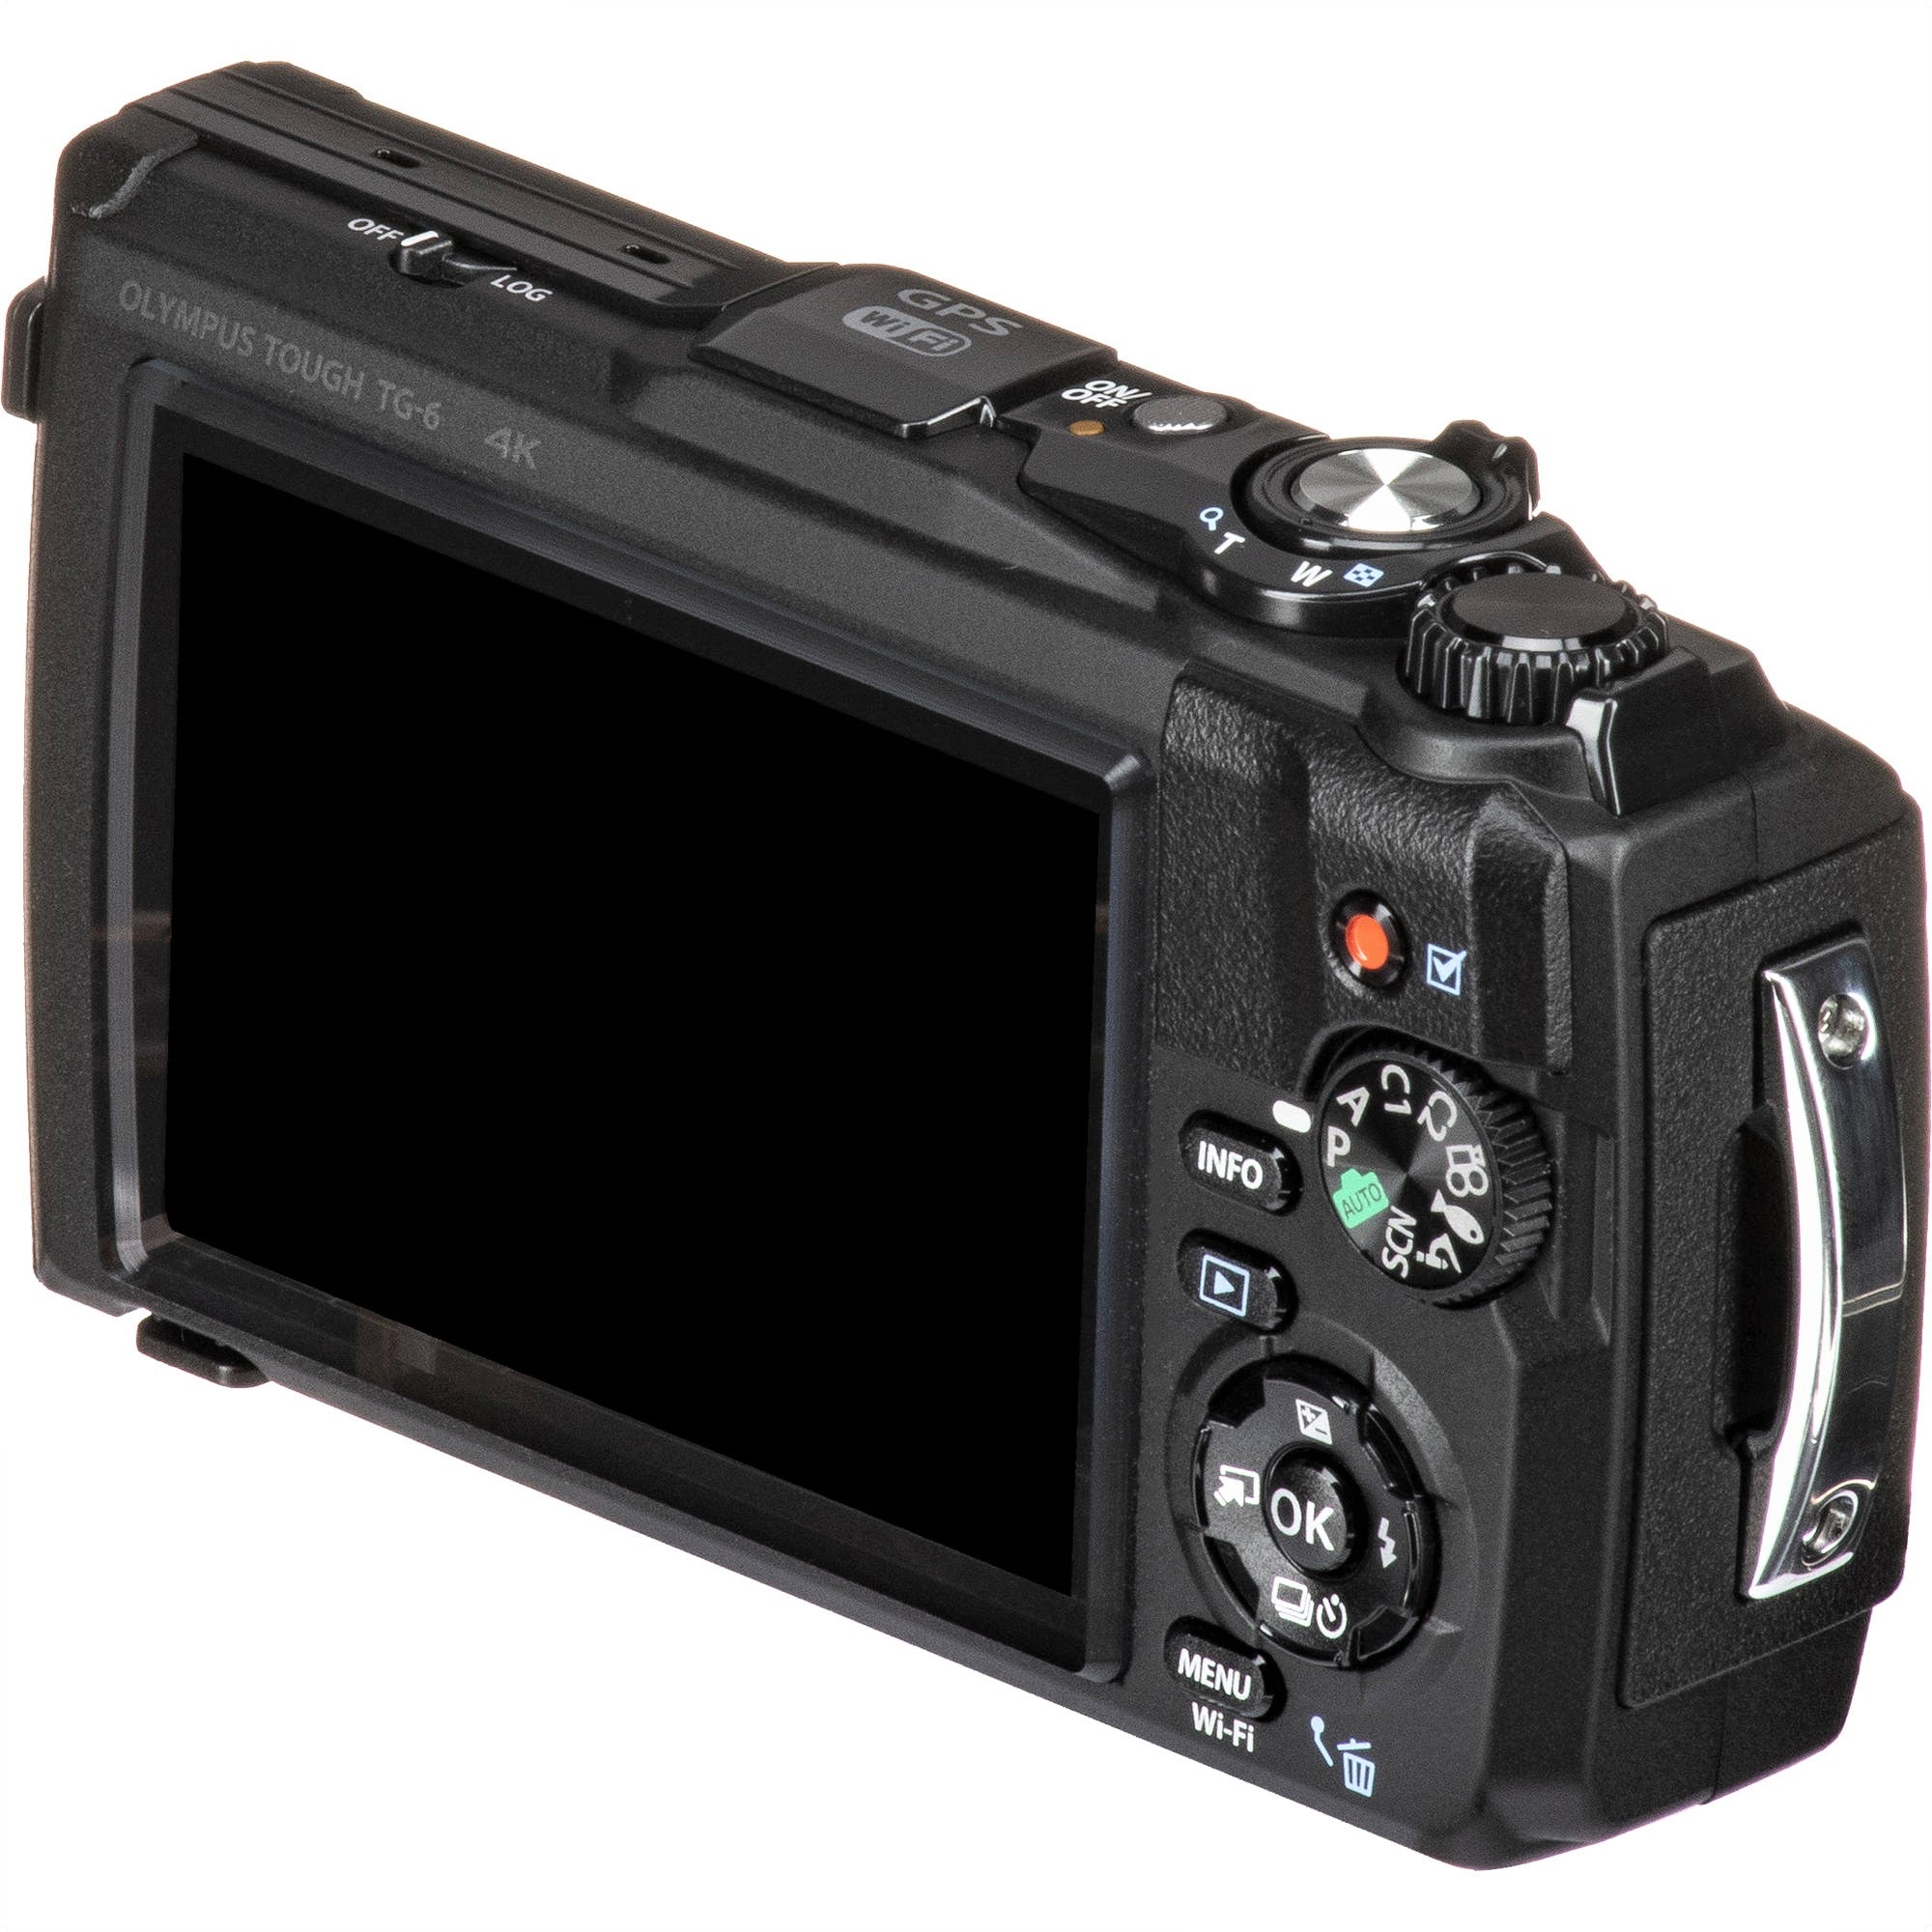 Olympus Tough TG-6 Compact Digital Camera (Black & Red)